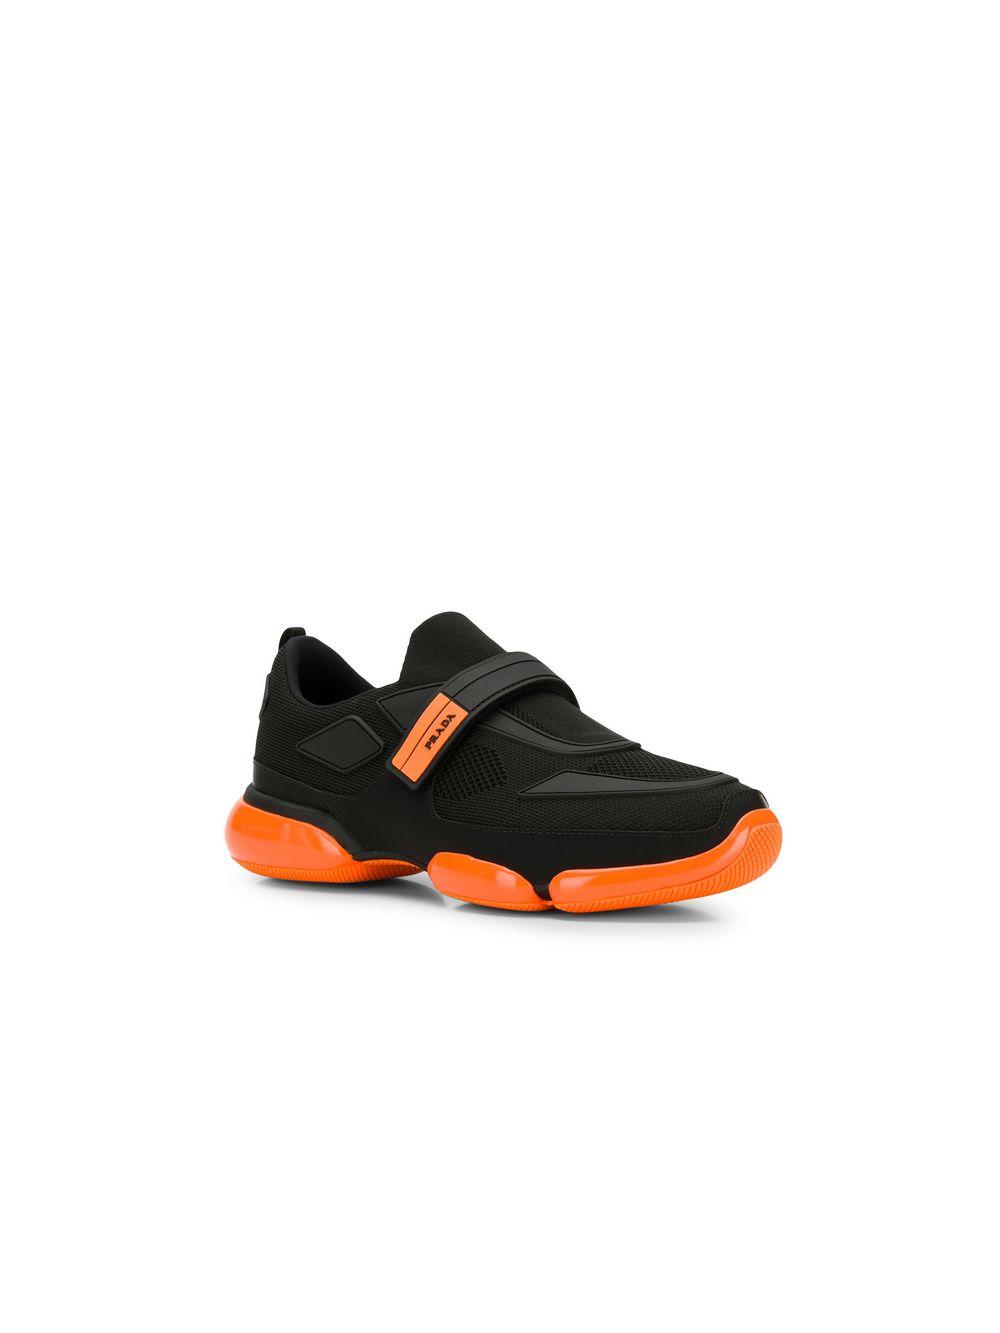 Prada Rubber Black And Orange Cloudbust Sole Detail Sneakers for Men | Lyst